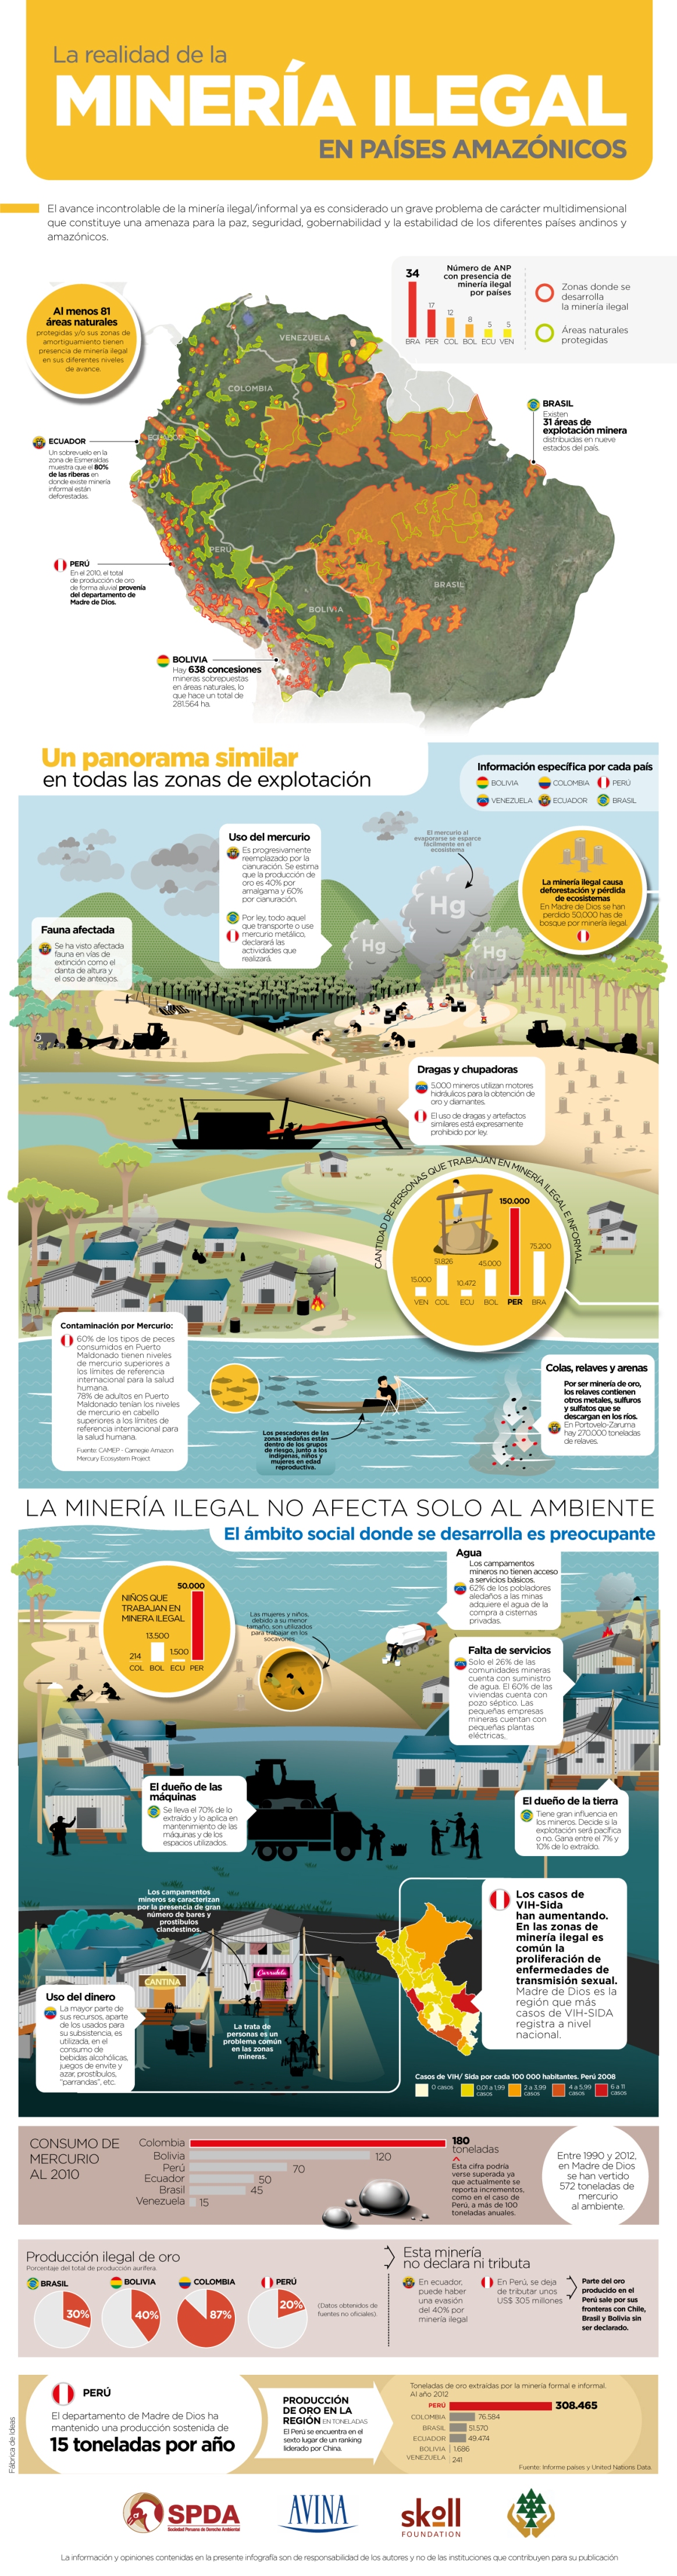 Infografia_Mineria-Ilegal-en-países-amazónicos